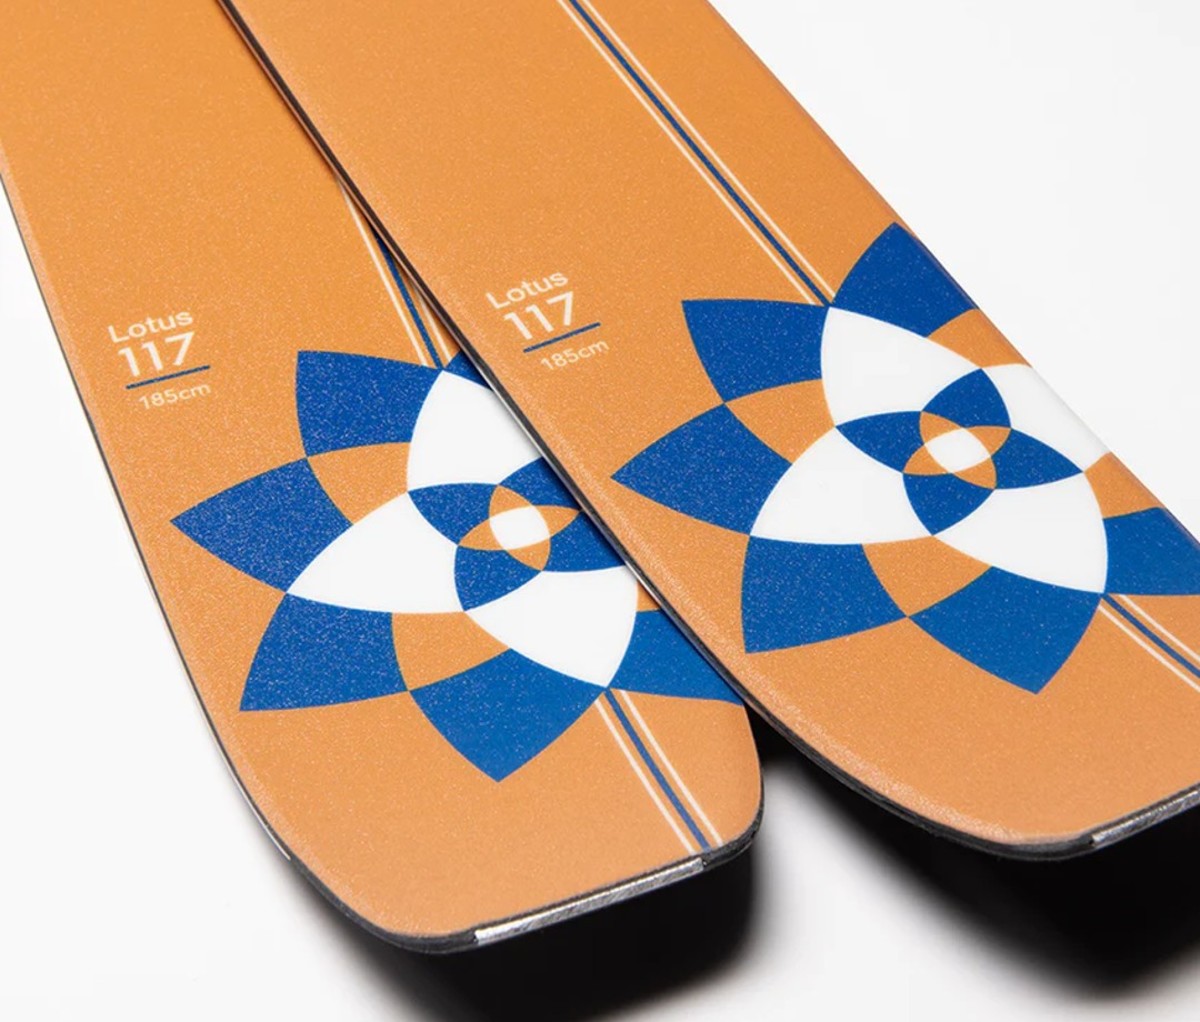 Orange skis with blue and white lotus pattern